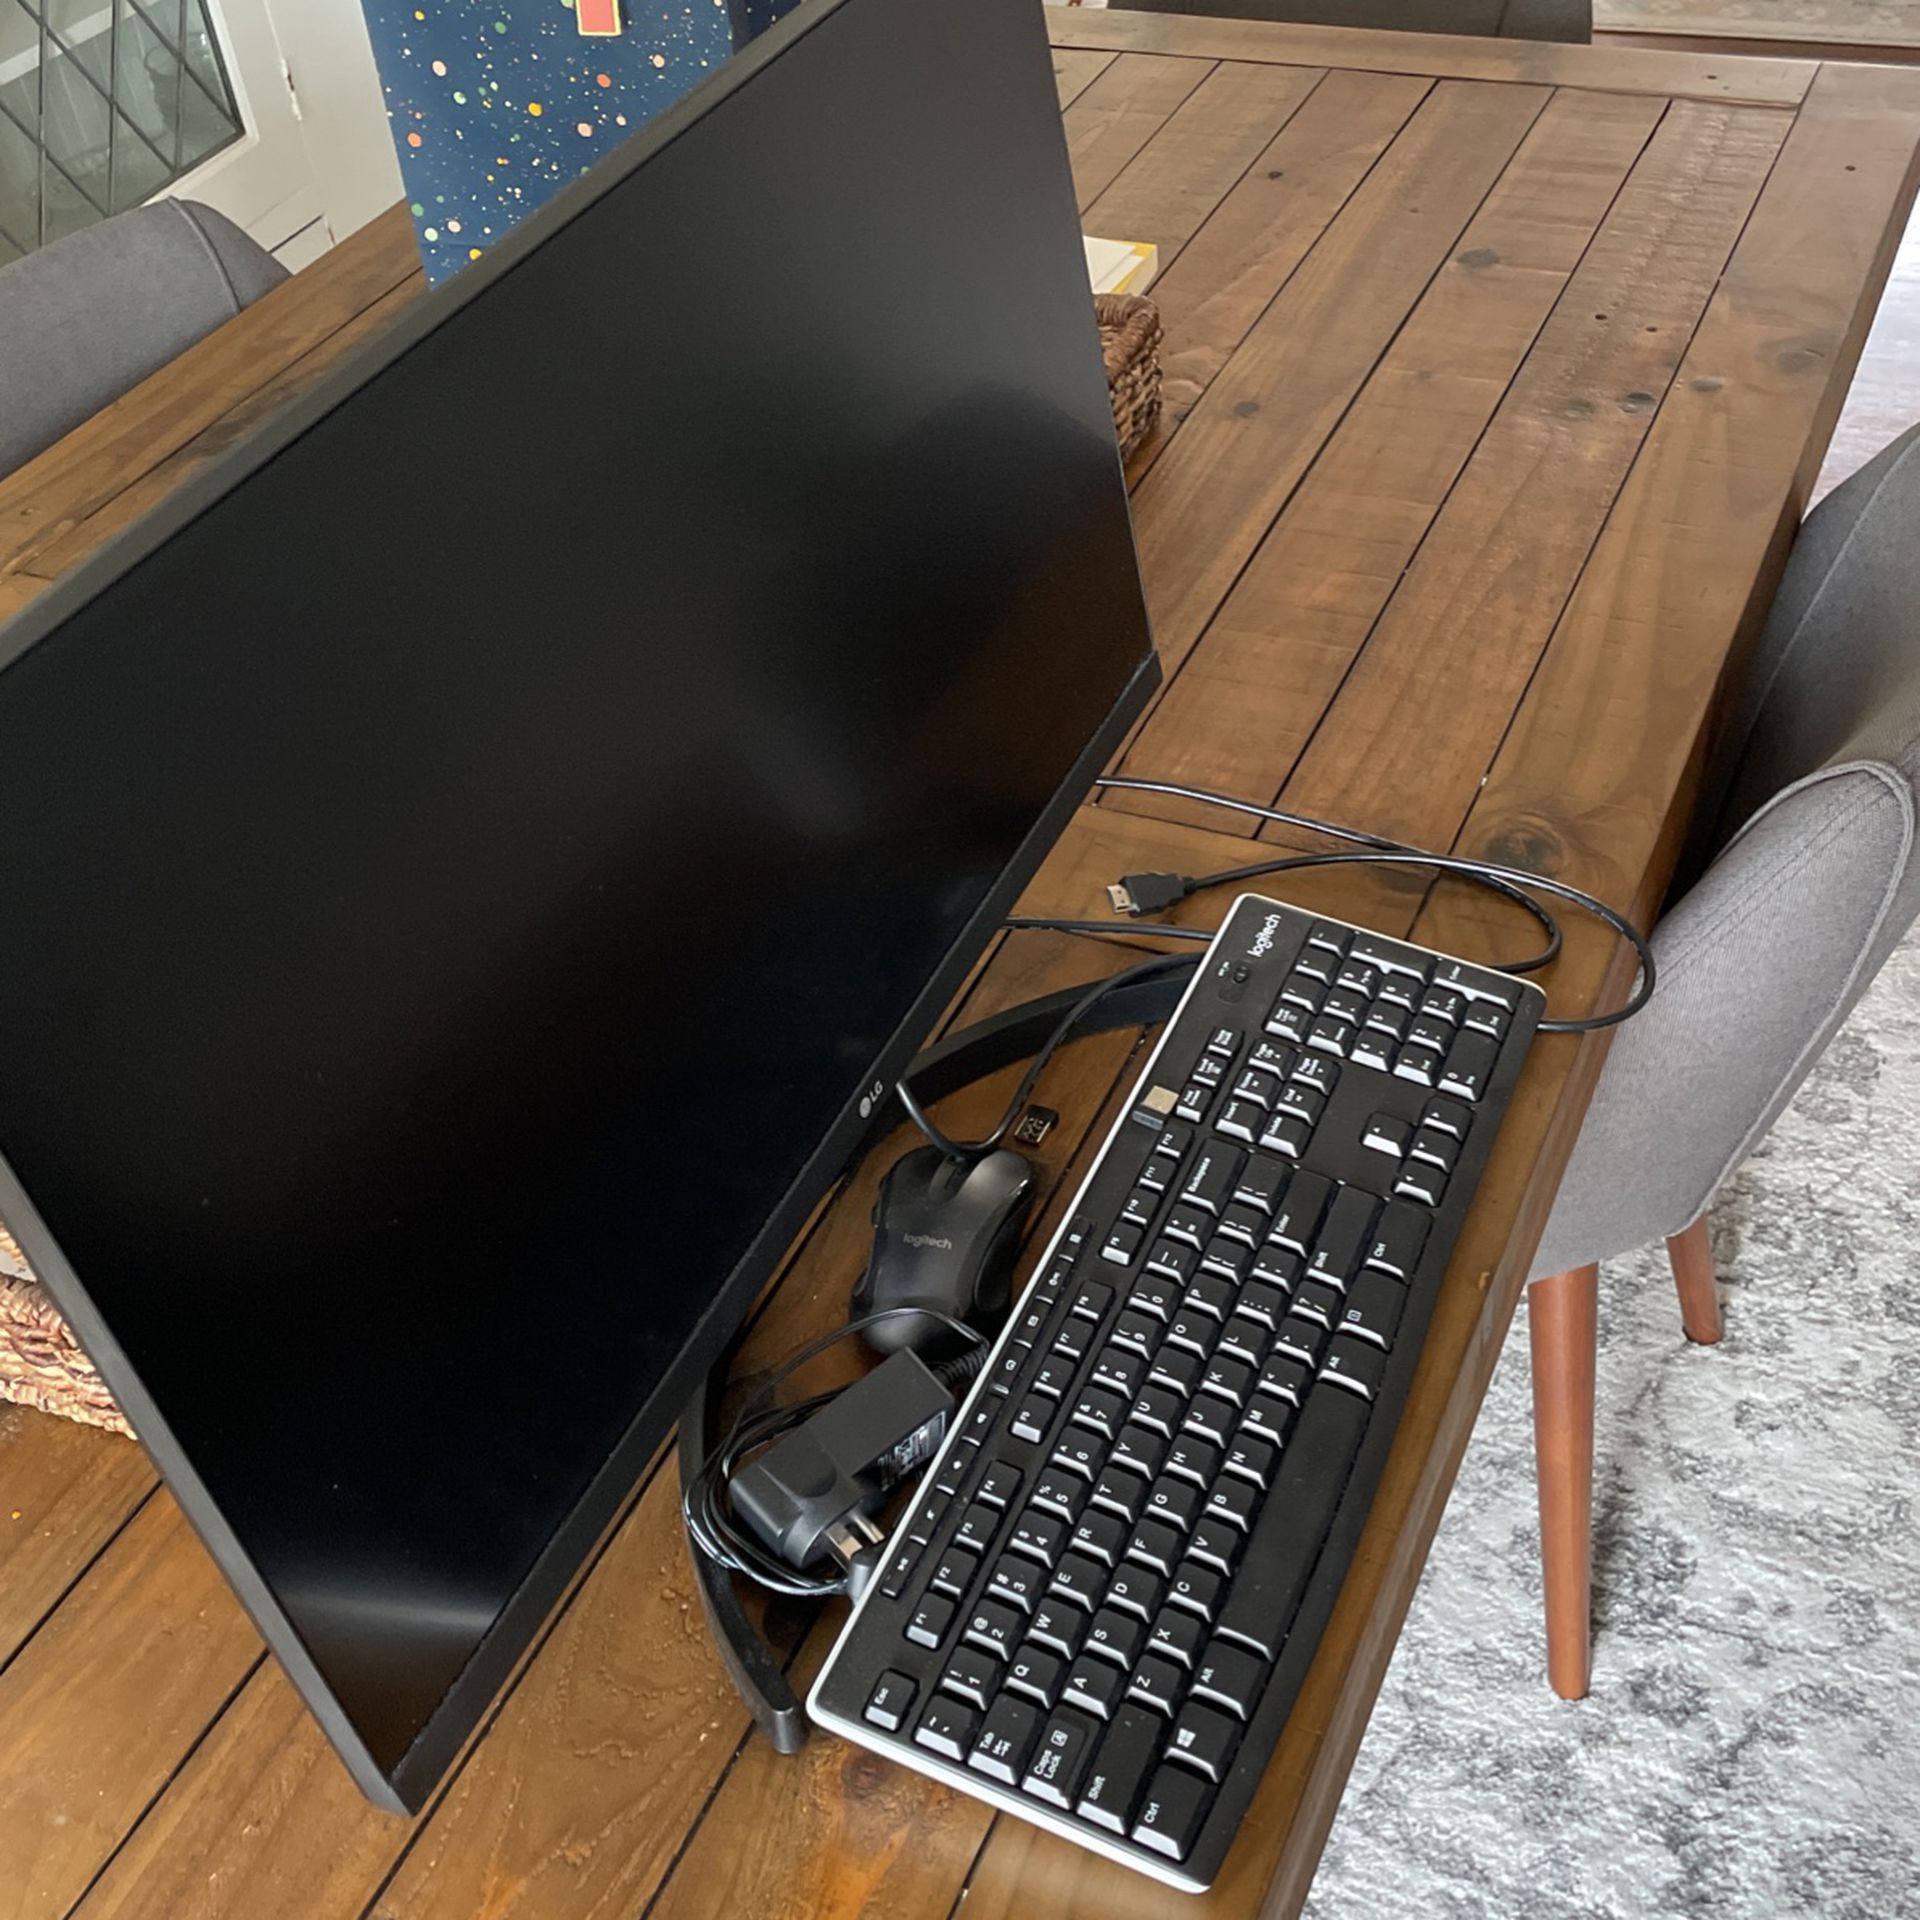 Monitor, Mouse, Keyboard